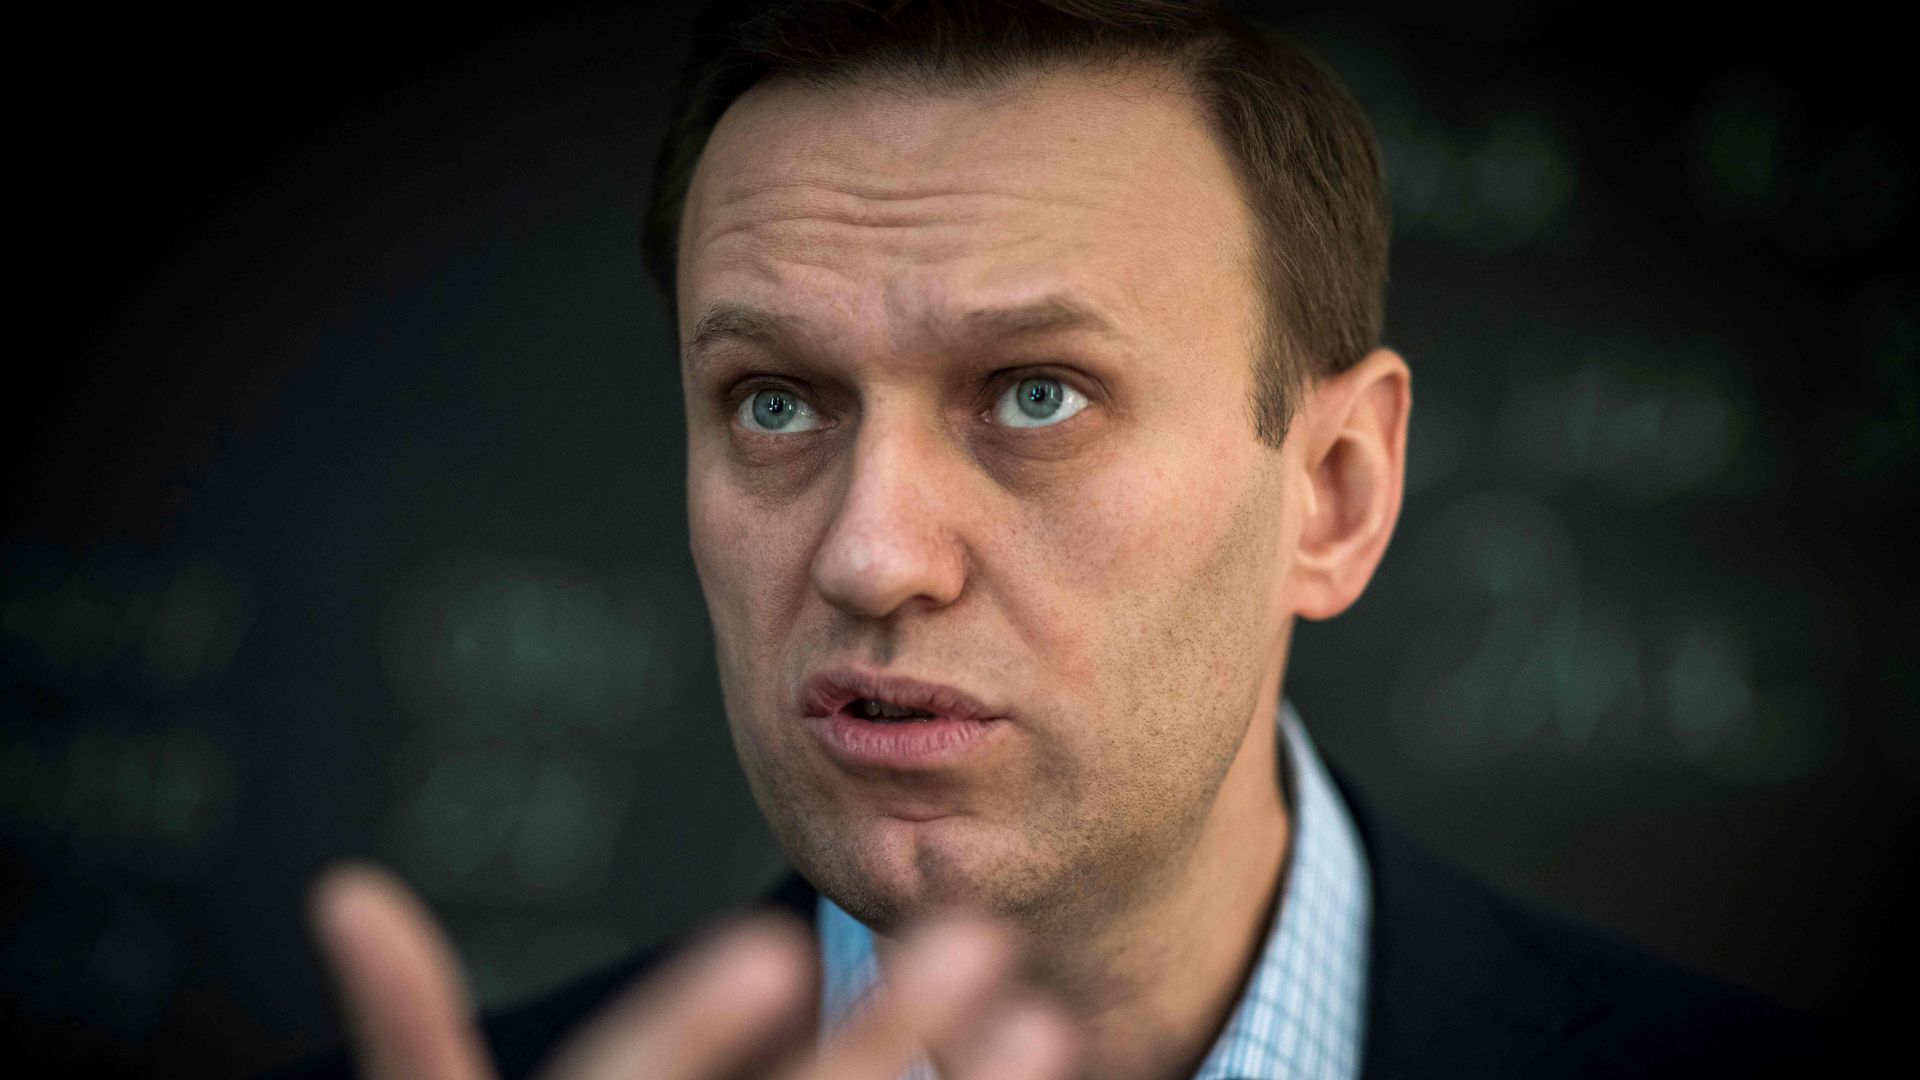 Alexei Navalny's face.